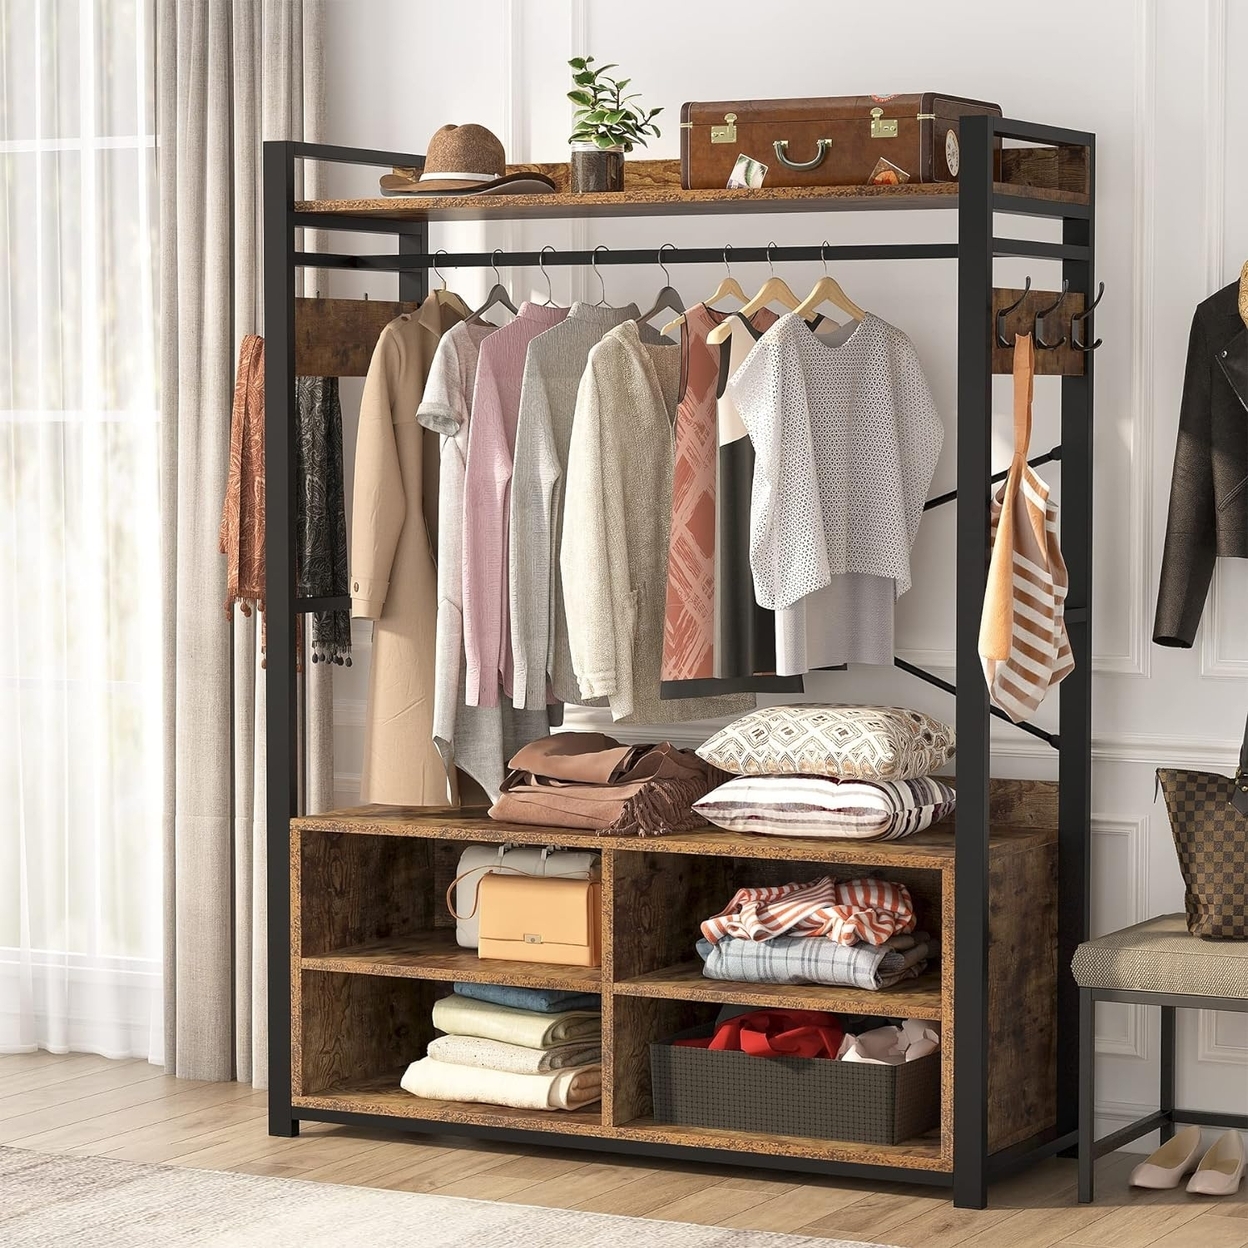 Tribesigns Free-standing Closet Clothing Rack, Metal Closet Organizer System With Shelves And Hooks,Garment Rack Shelving